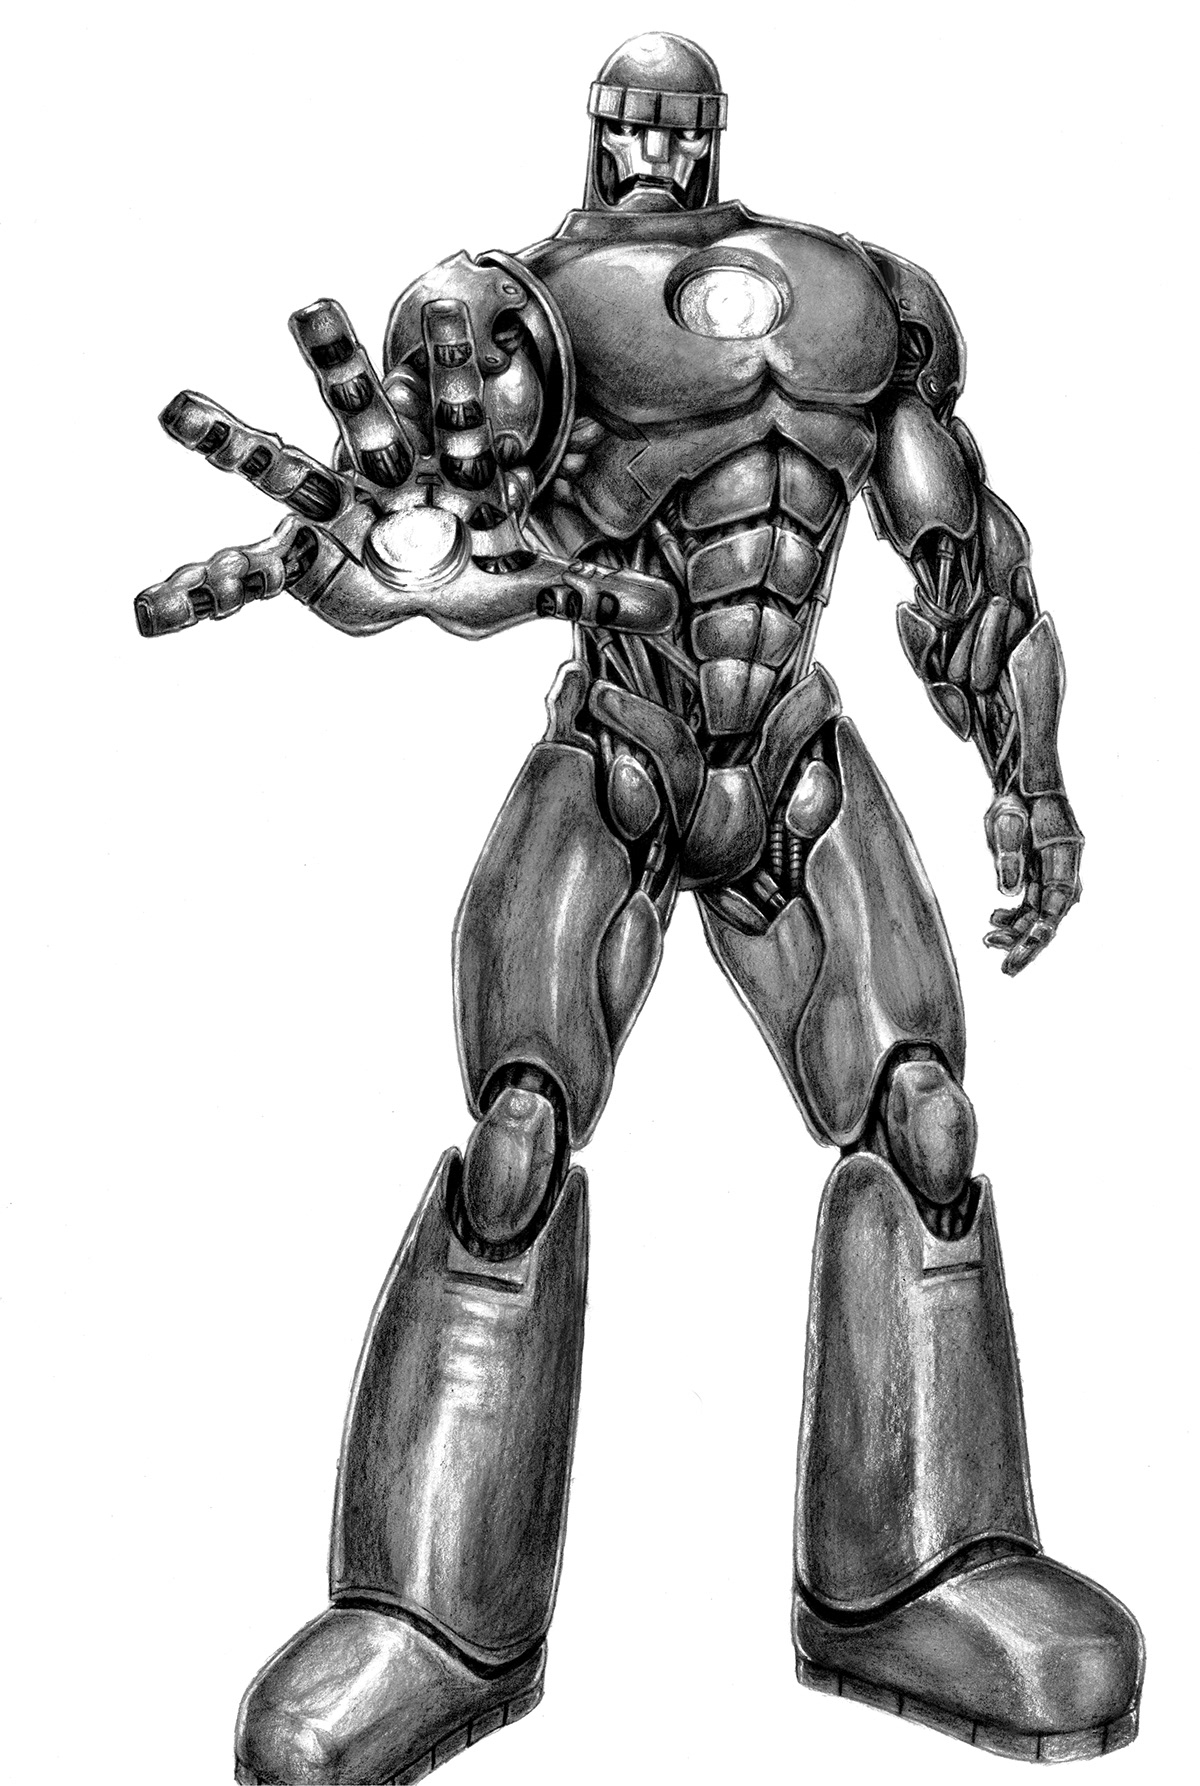 sentinel x-men Xmen comicbook Comic Book SuperHero super villain machine robot metal shiny